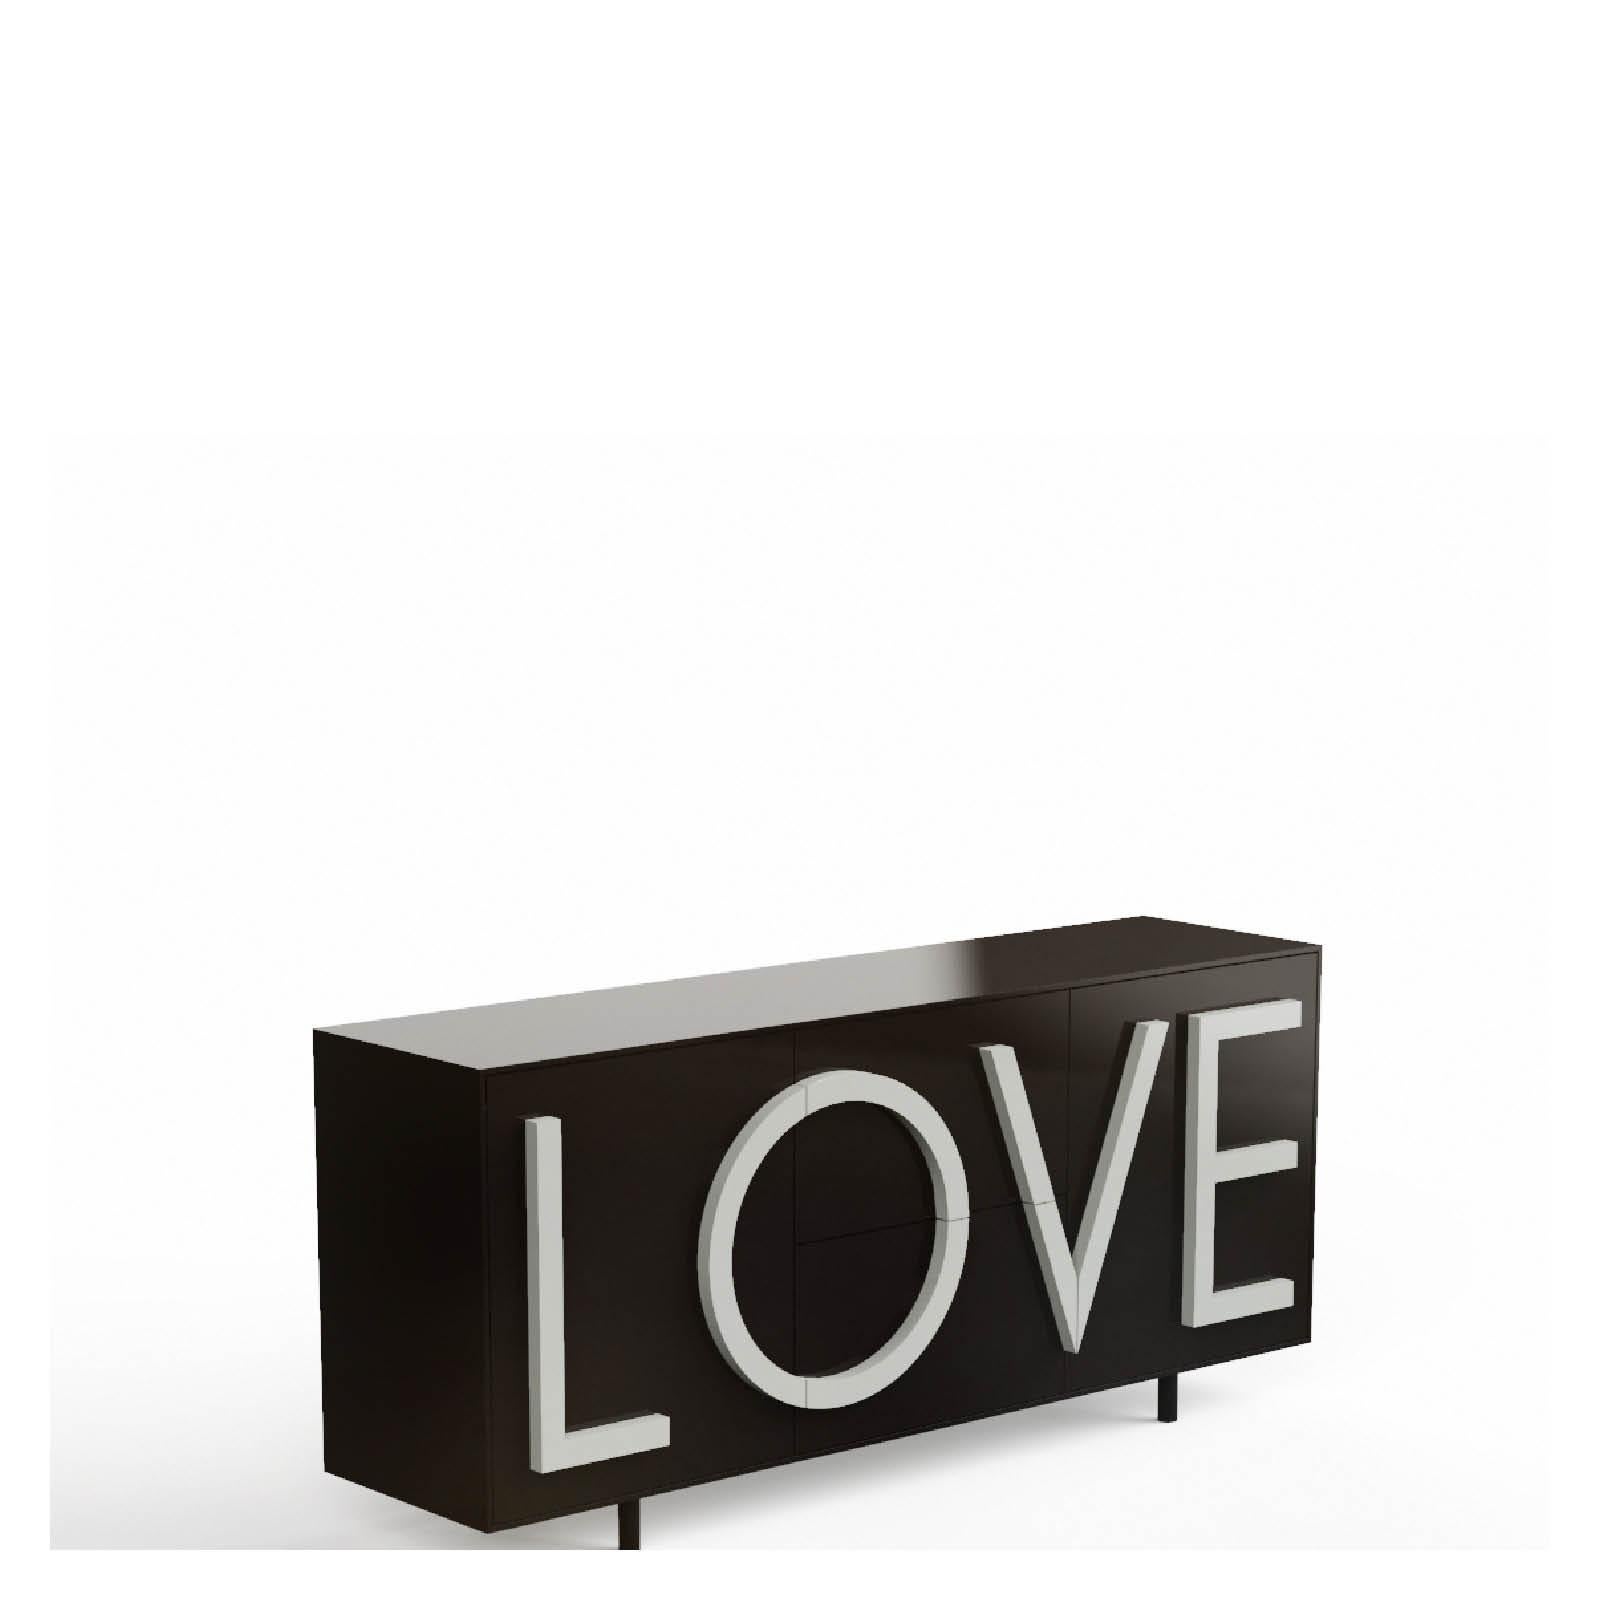 LOVE  cabinet  by Fabio Novembre for Driade In New Condition For Sale In Brooklyn, NY